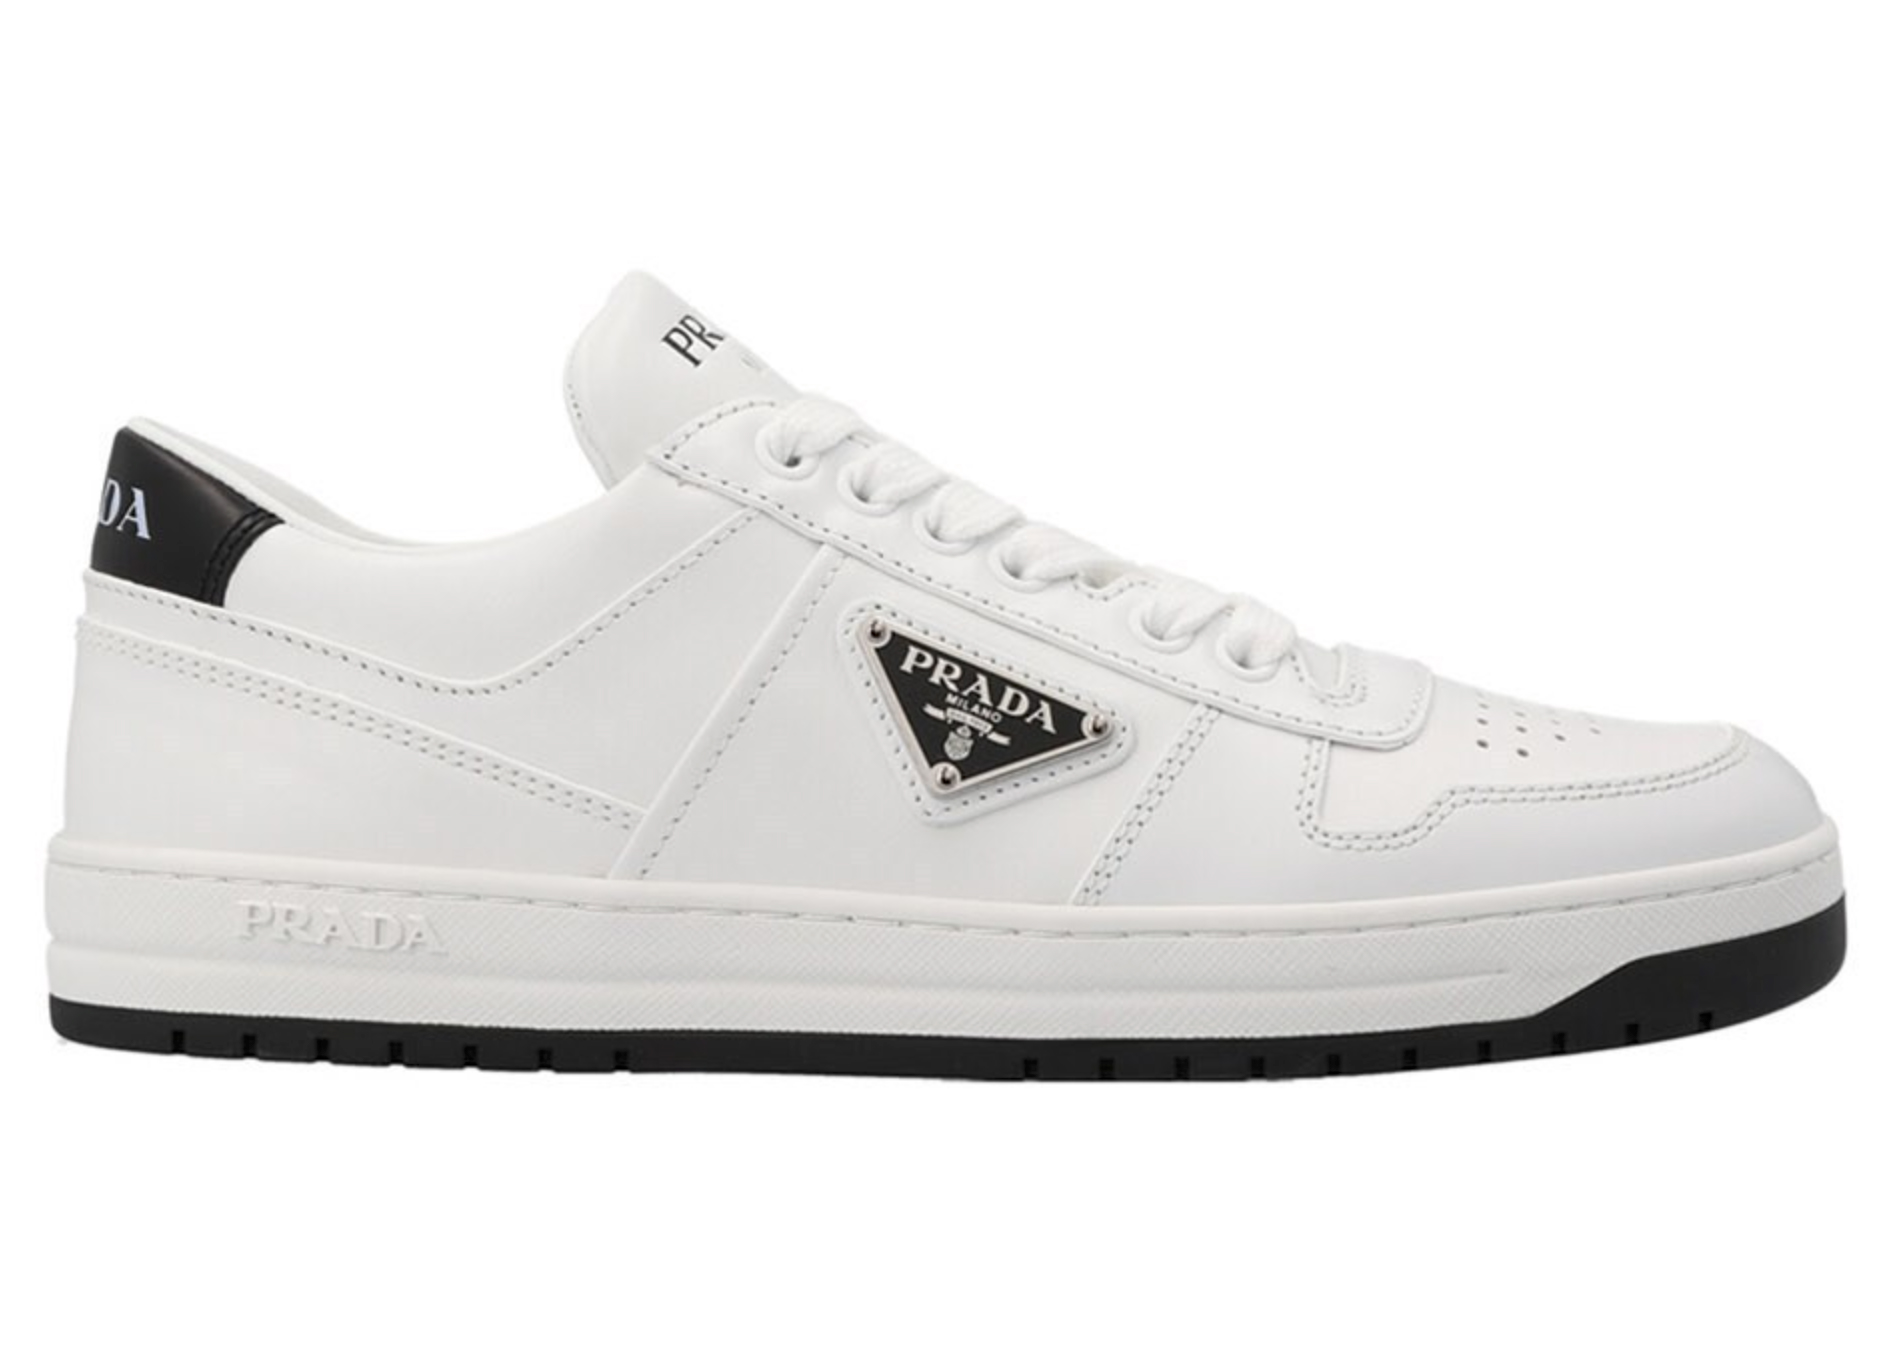 Prada Downtown Low Top Sneakers Leather White White Black 